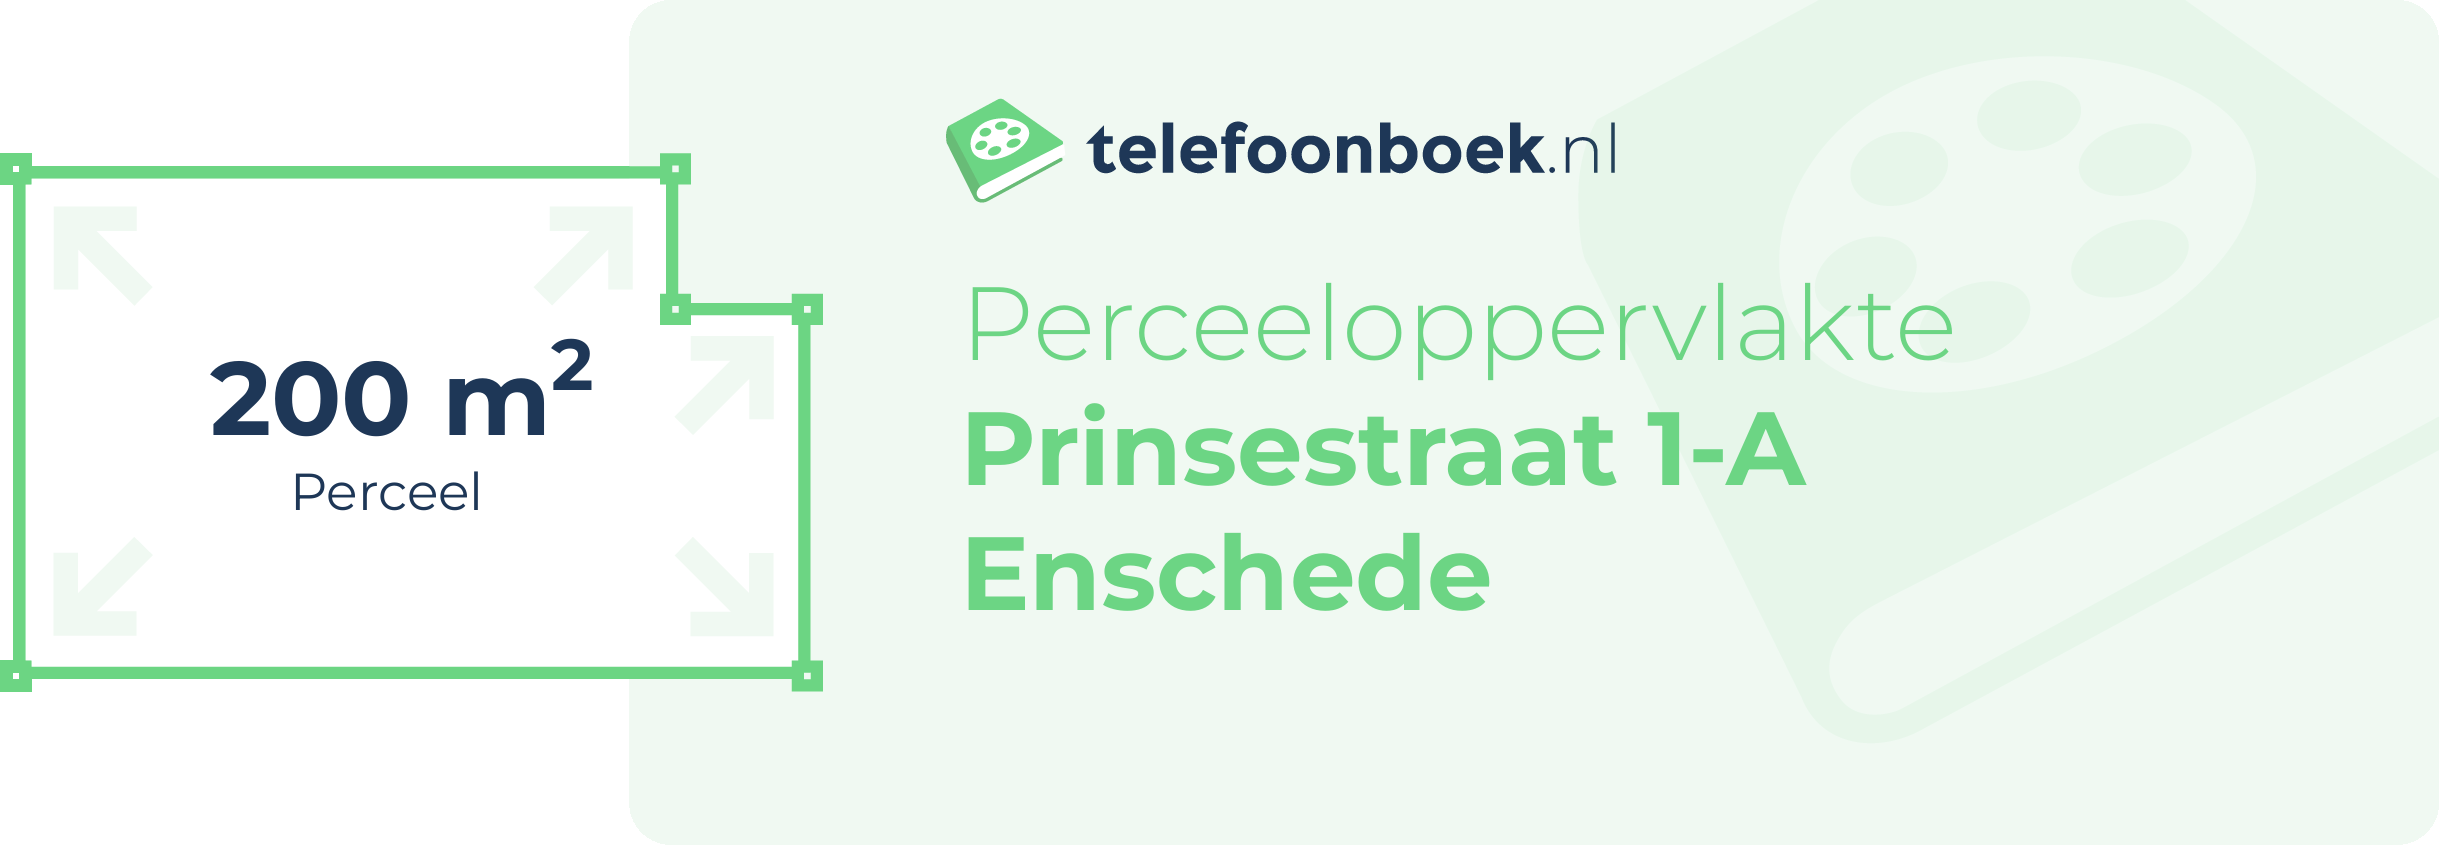 Perceeloppervlakte Prinsestraat 1-A Enschede